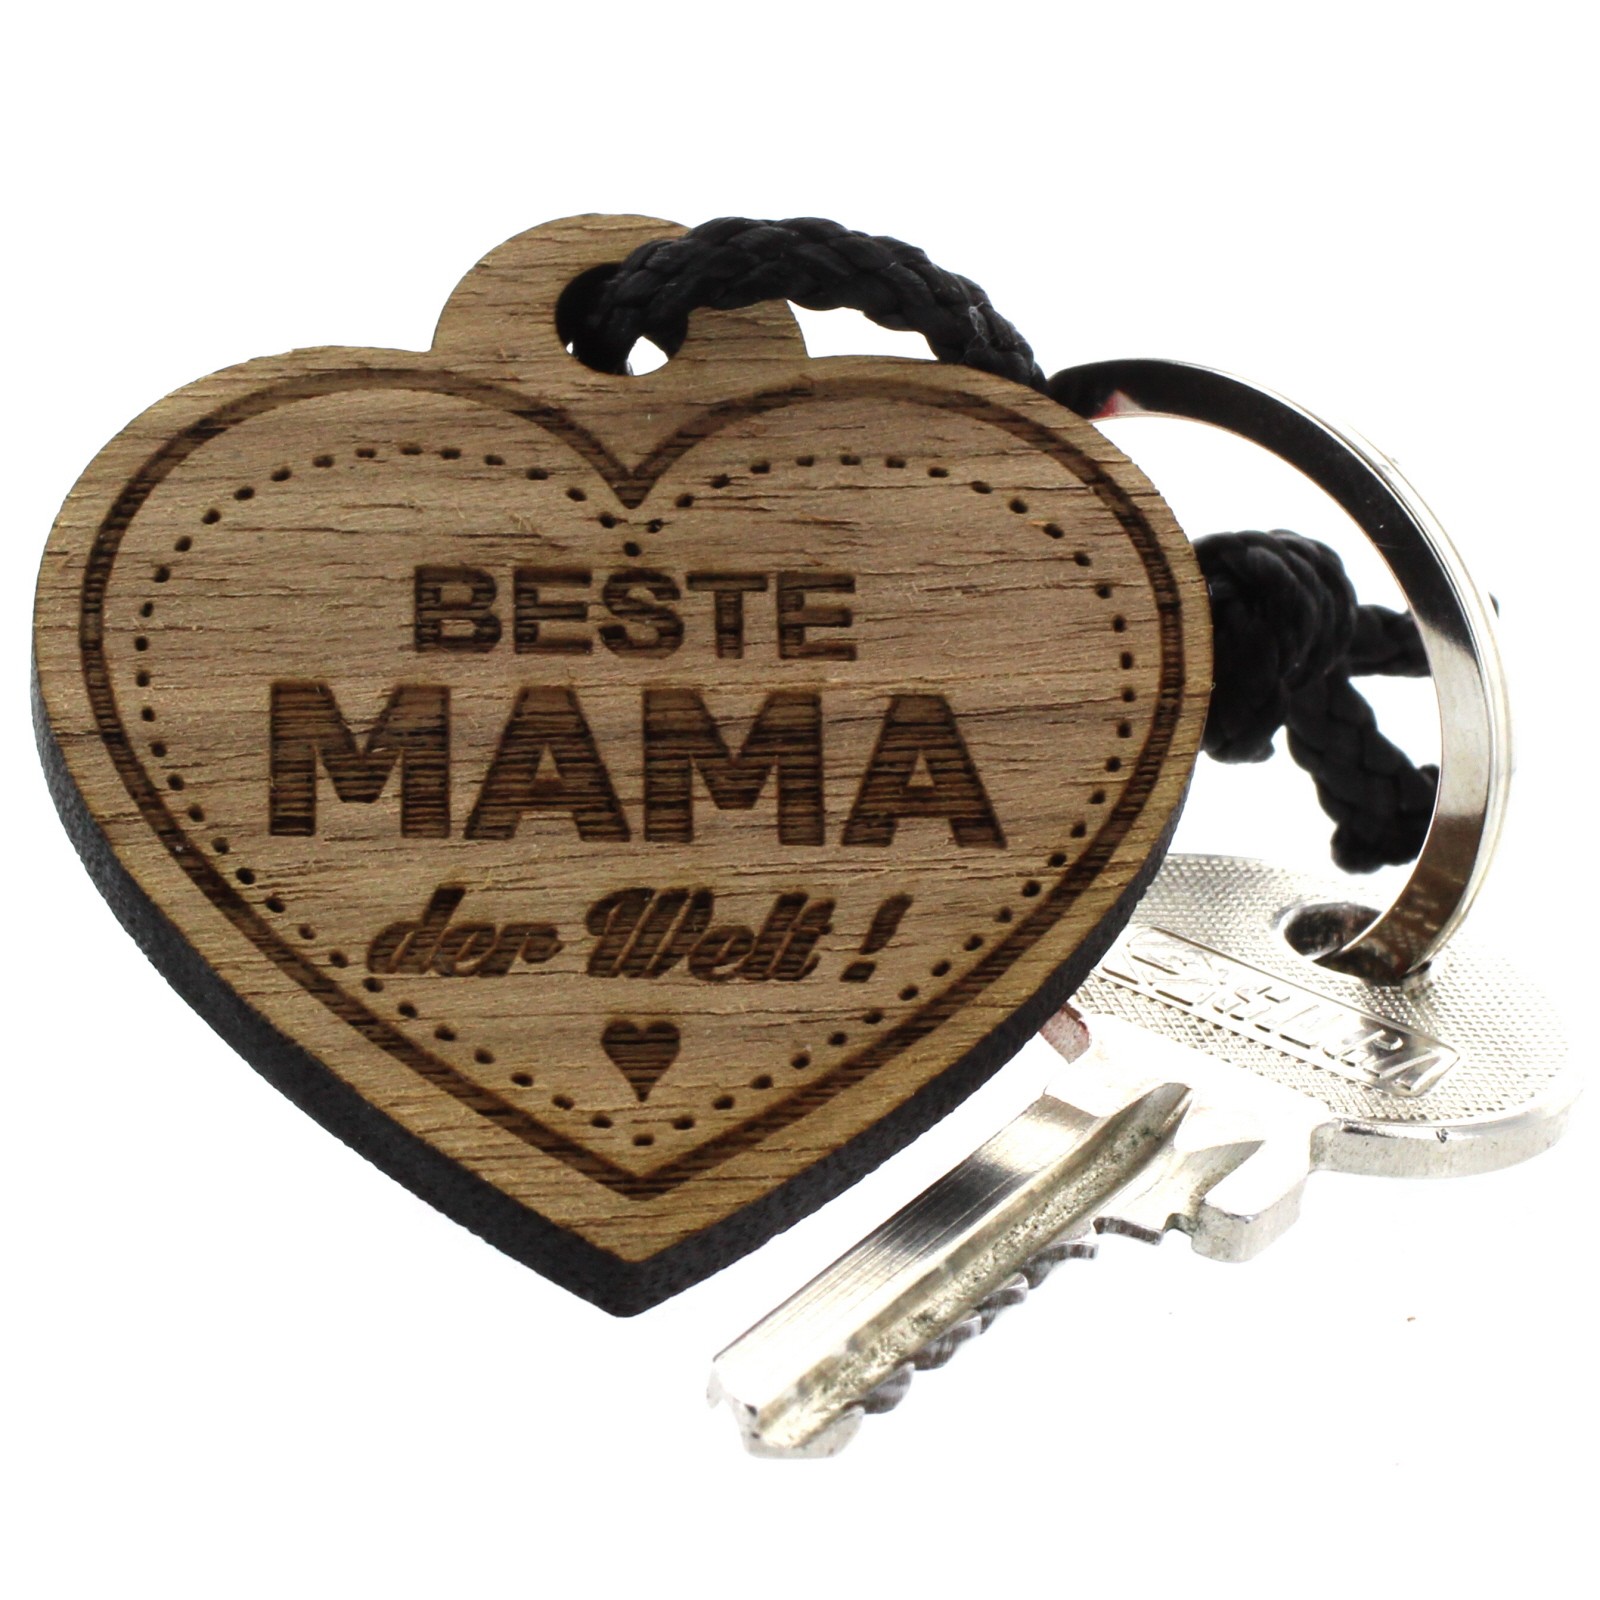 Lieblingsmensch® Schlüsselanhänger mit Metallschlaufe Modell Beste Mama der Welt 